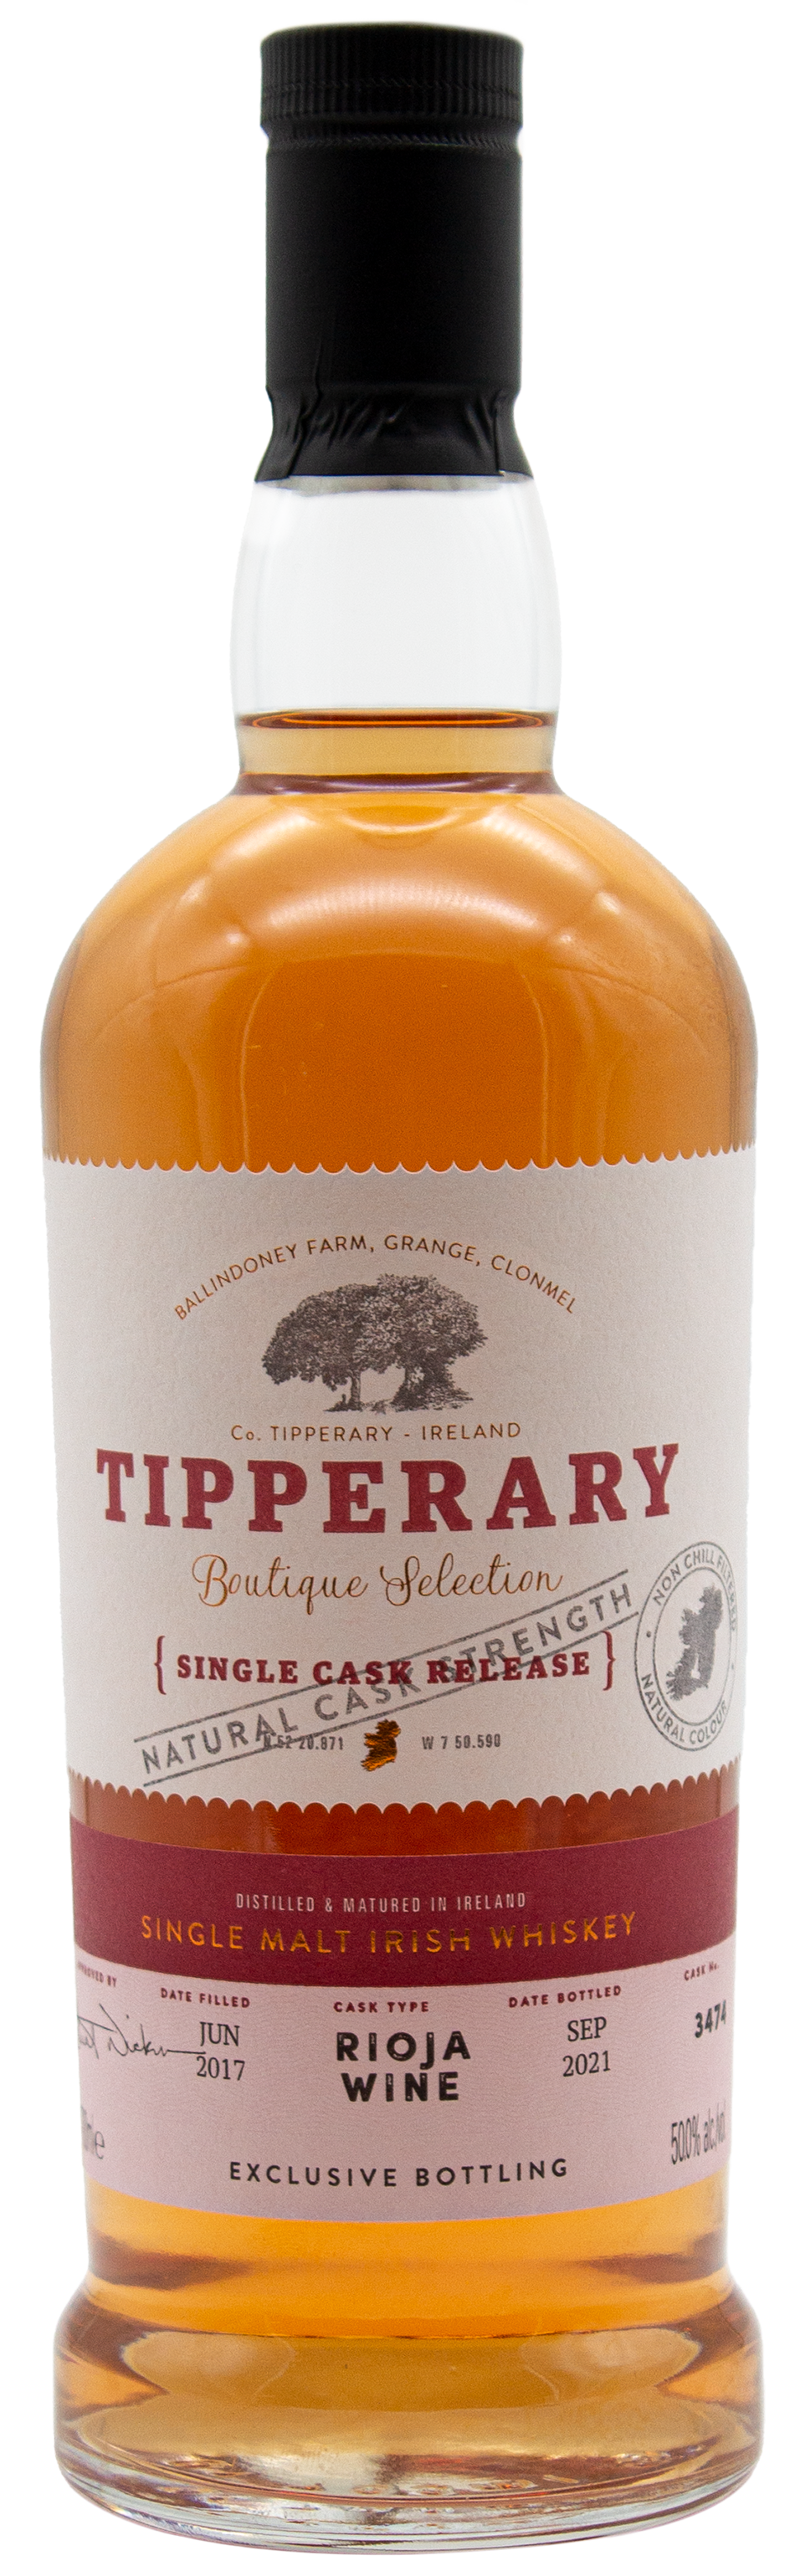 Tipperary Vintage 2017 Single Cask Homegrown Barley